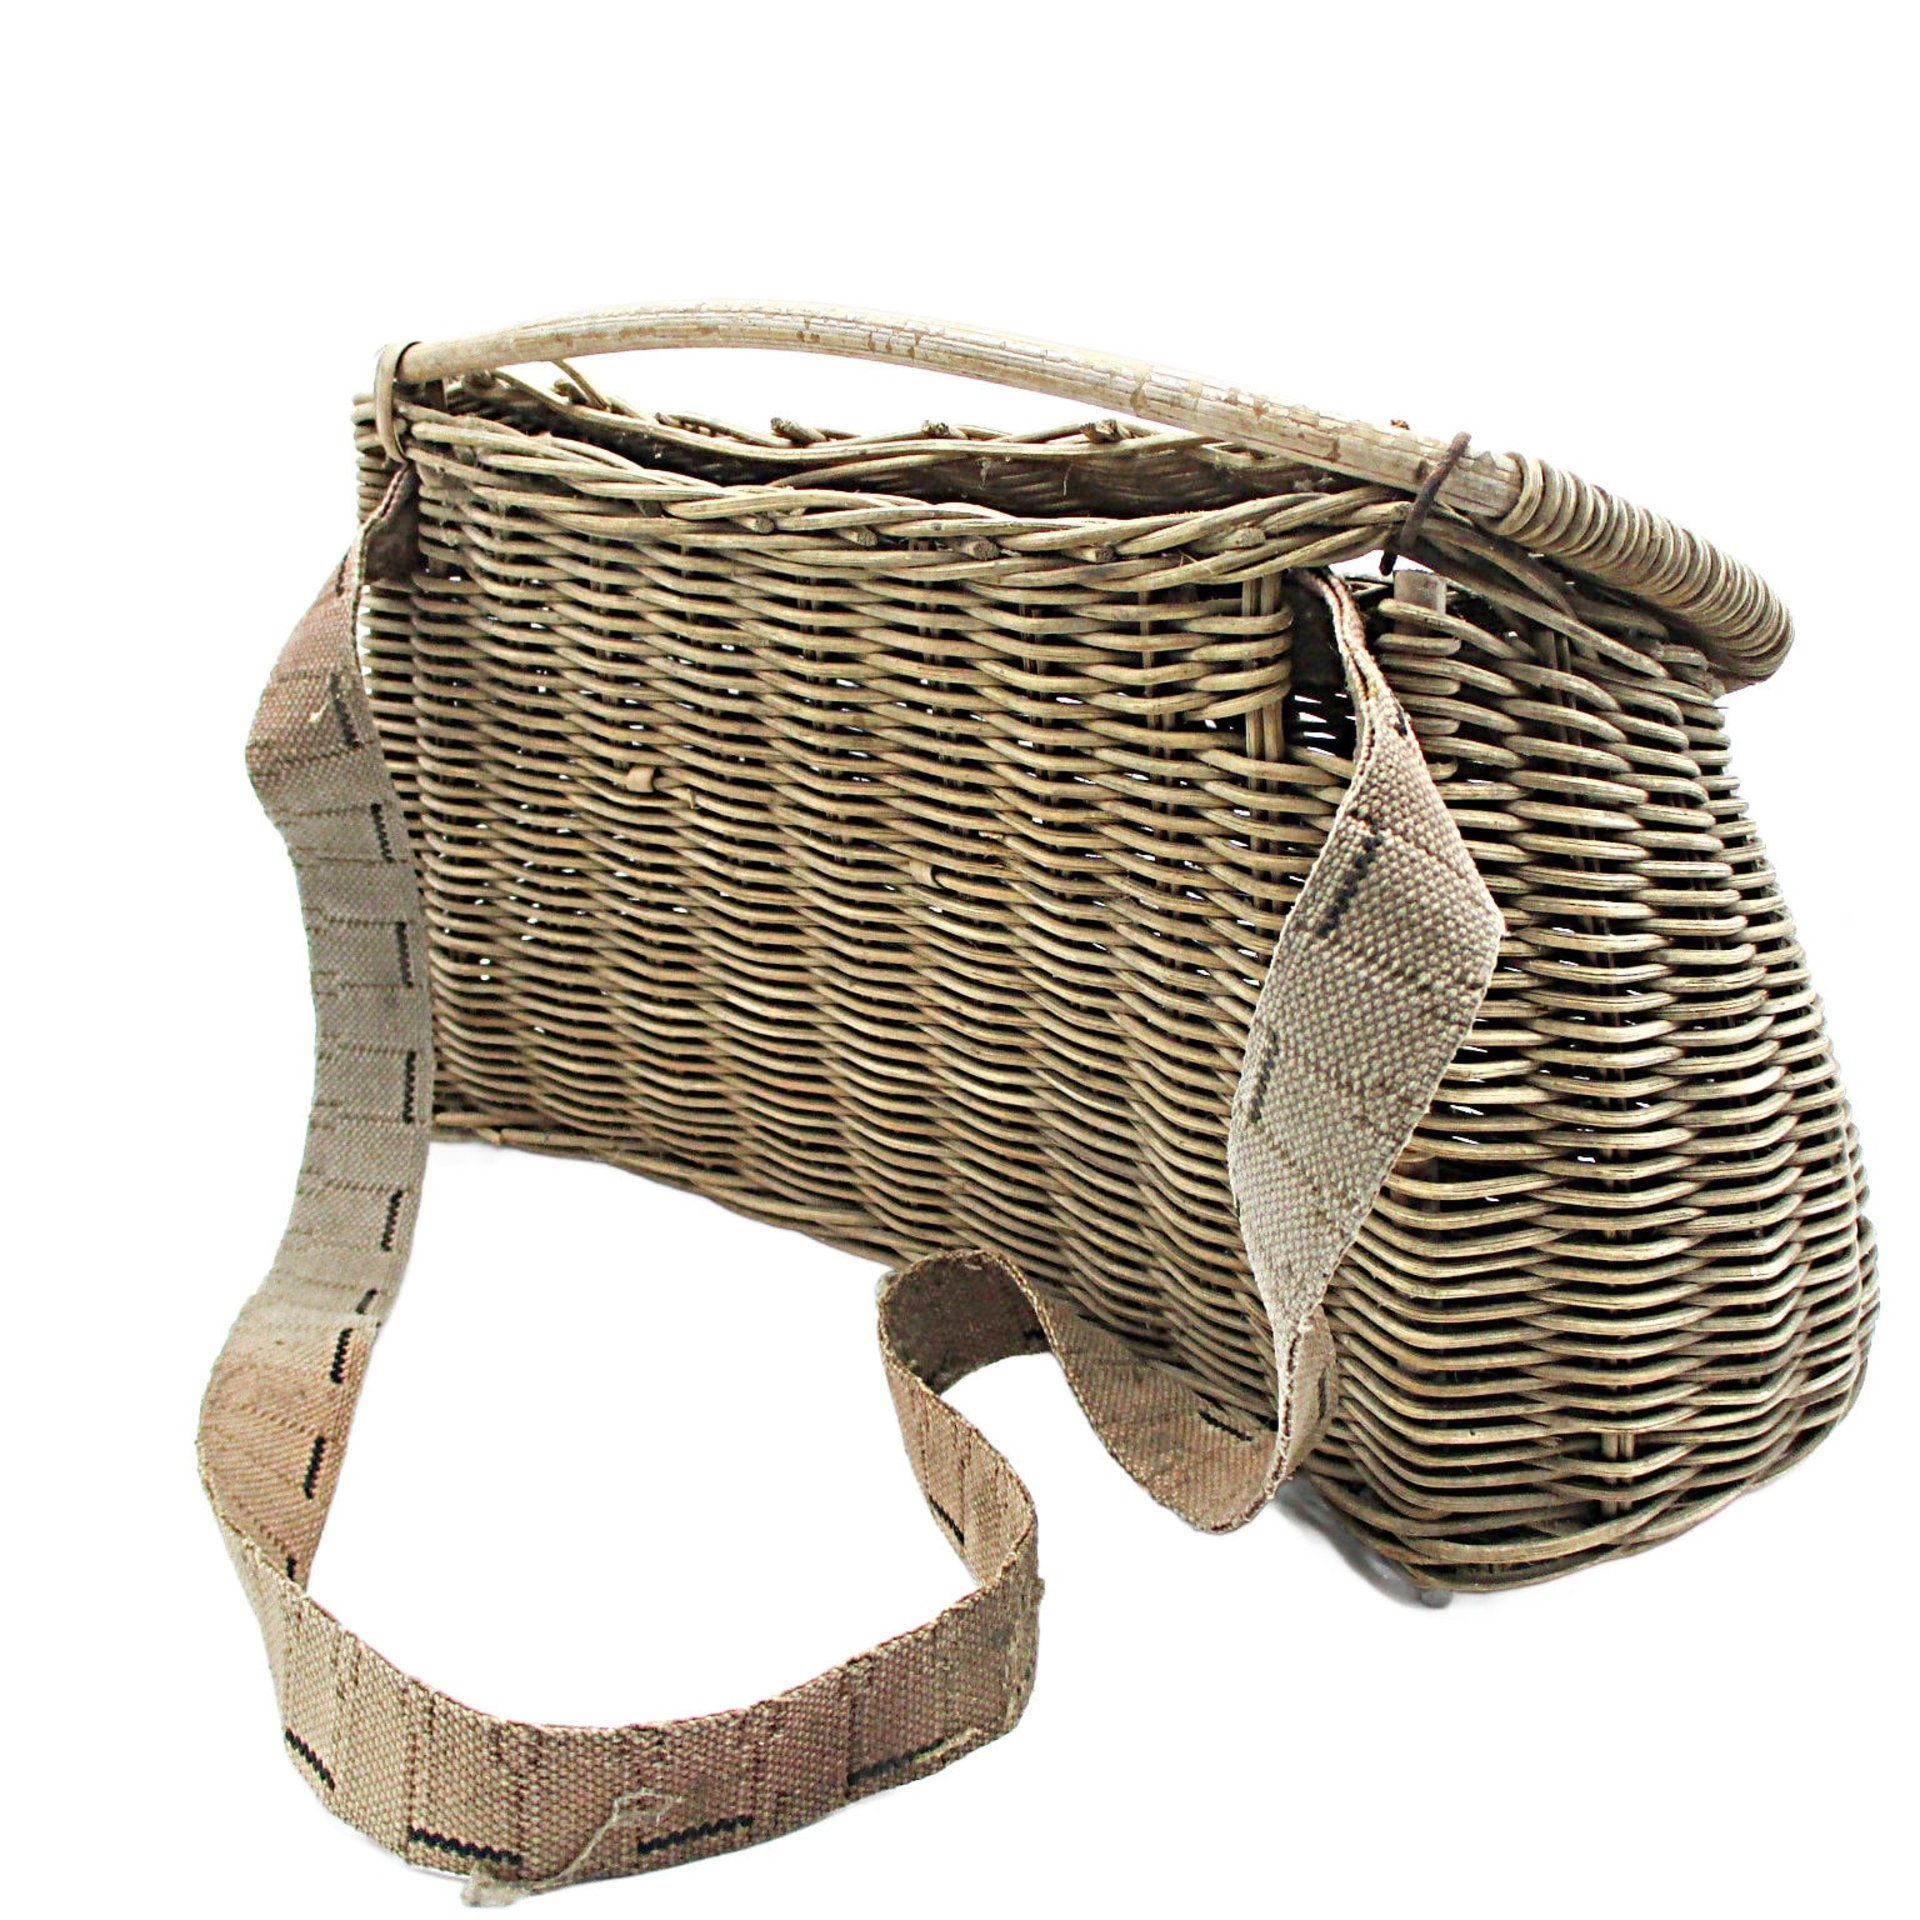 Vintage Fishing Creel Basket, Canvas Strap, Wicker, Lake House Decor, Gift for Fisherman